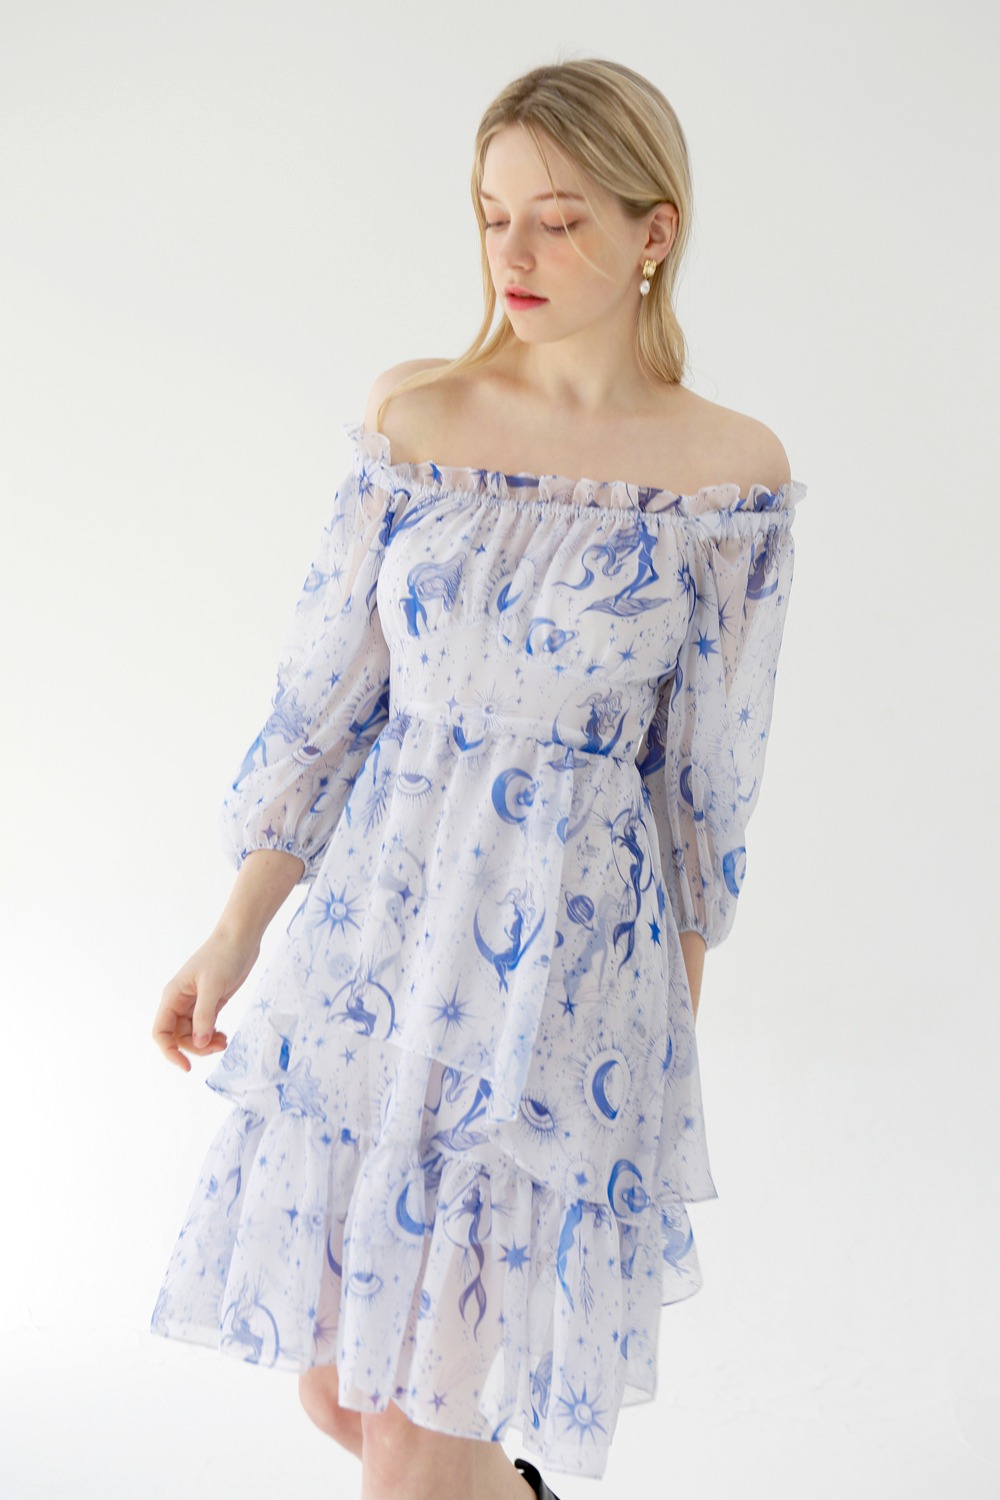 Fairy dream shirring dress (White)